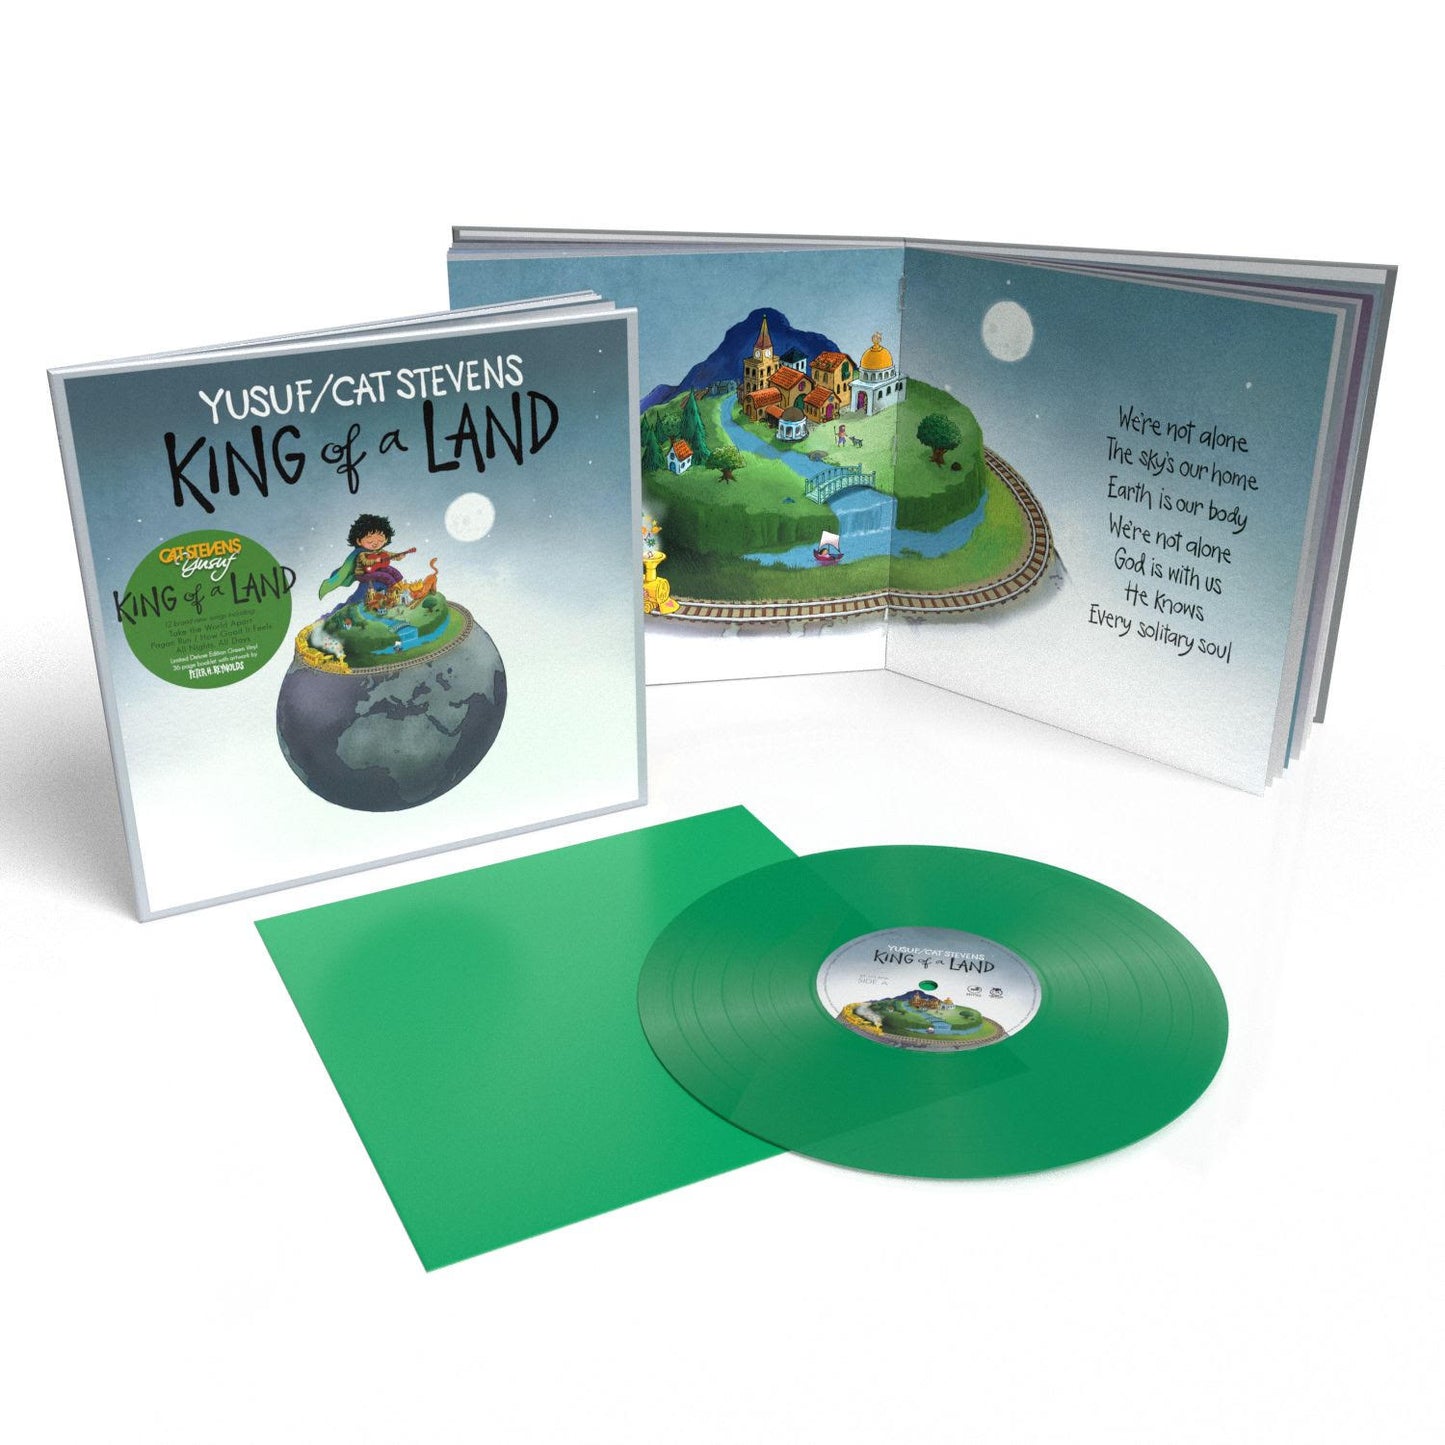 Yusuf/Cat Stevens King of a Land Ltd Green Vinyl